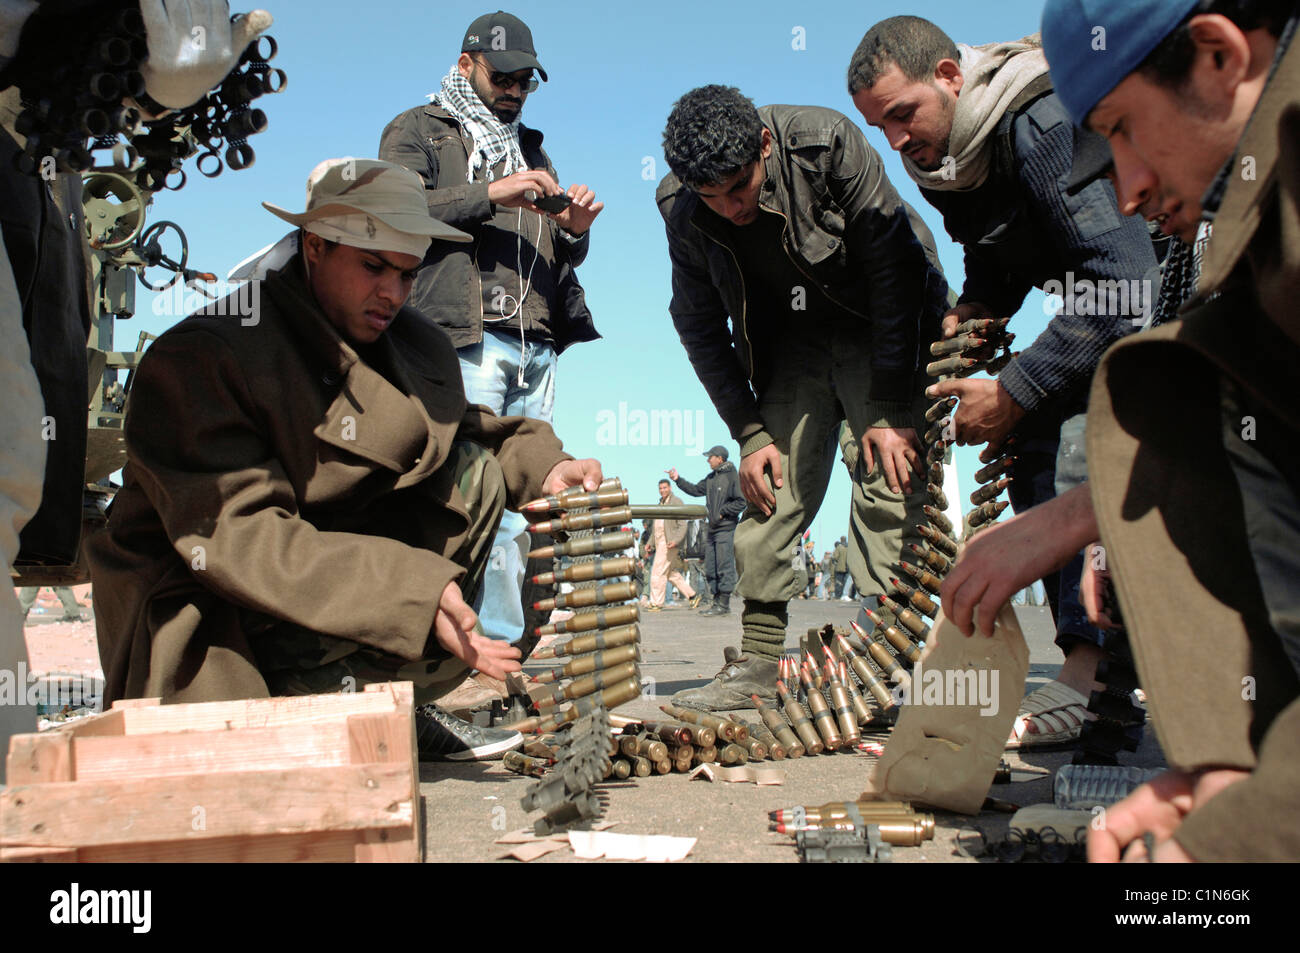 Rebekls ricaricare pistole AAA Ras Lanuf Libia Foto Stock